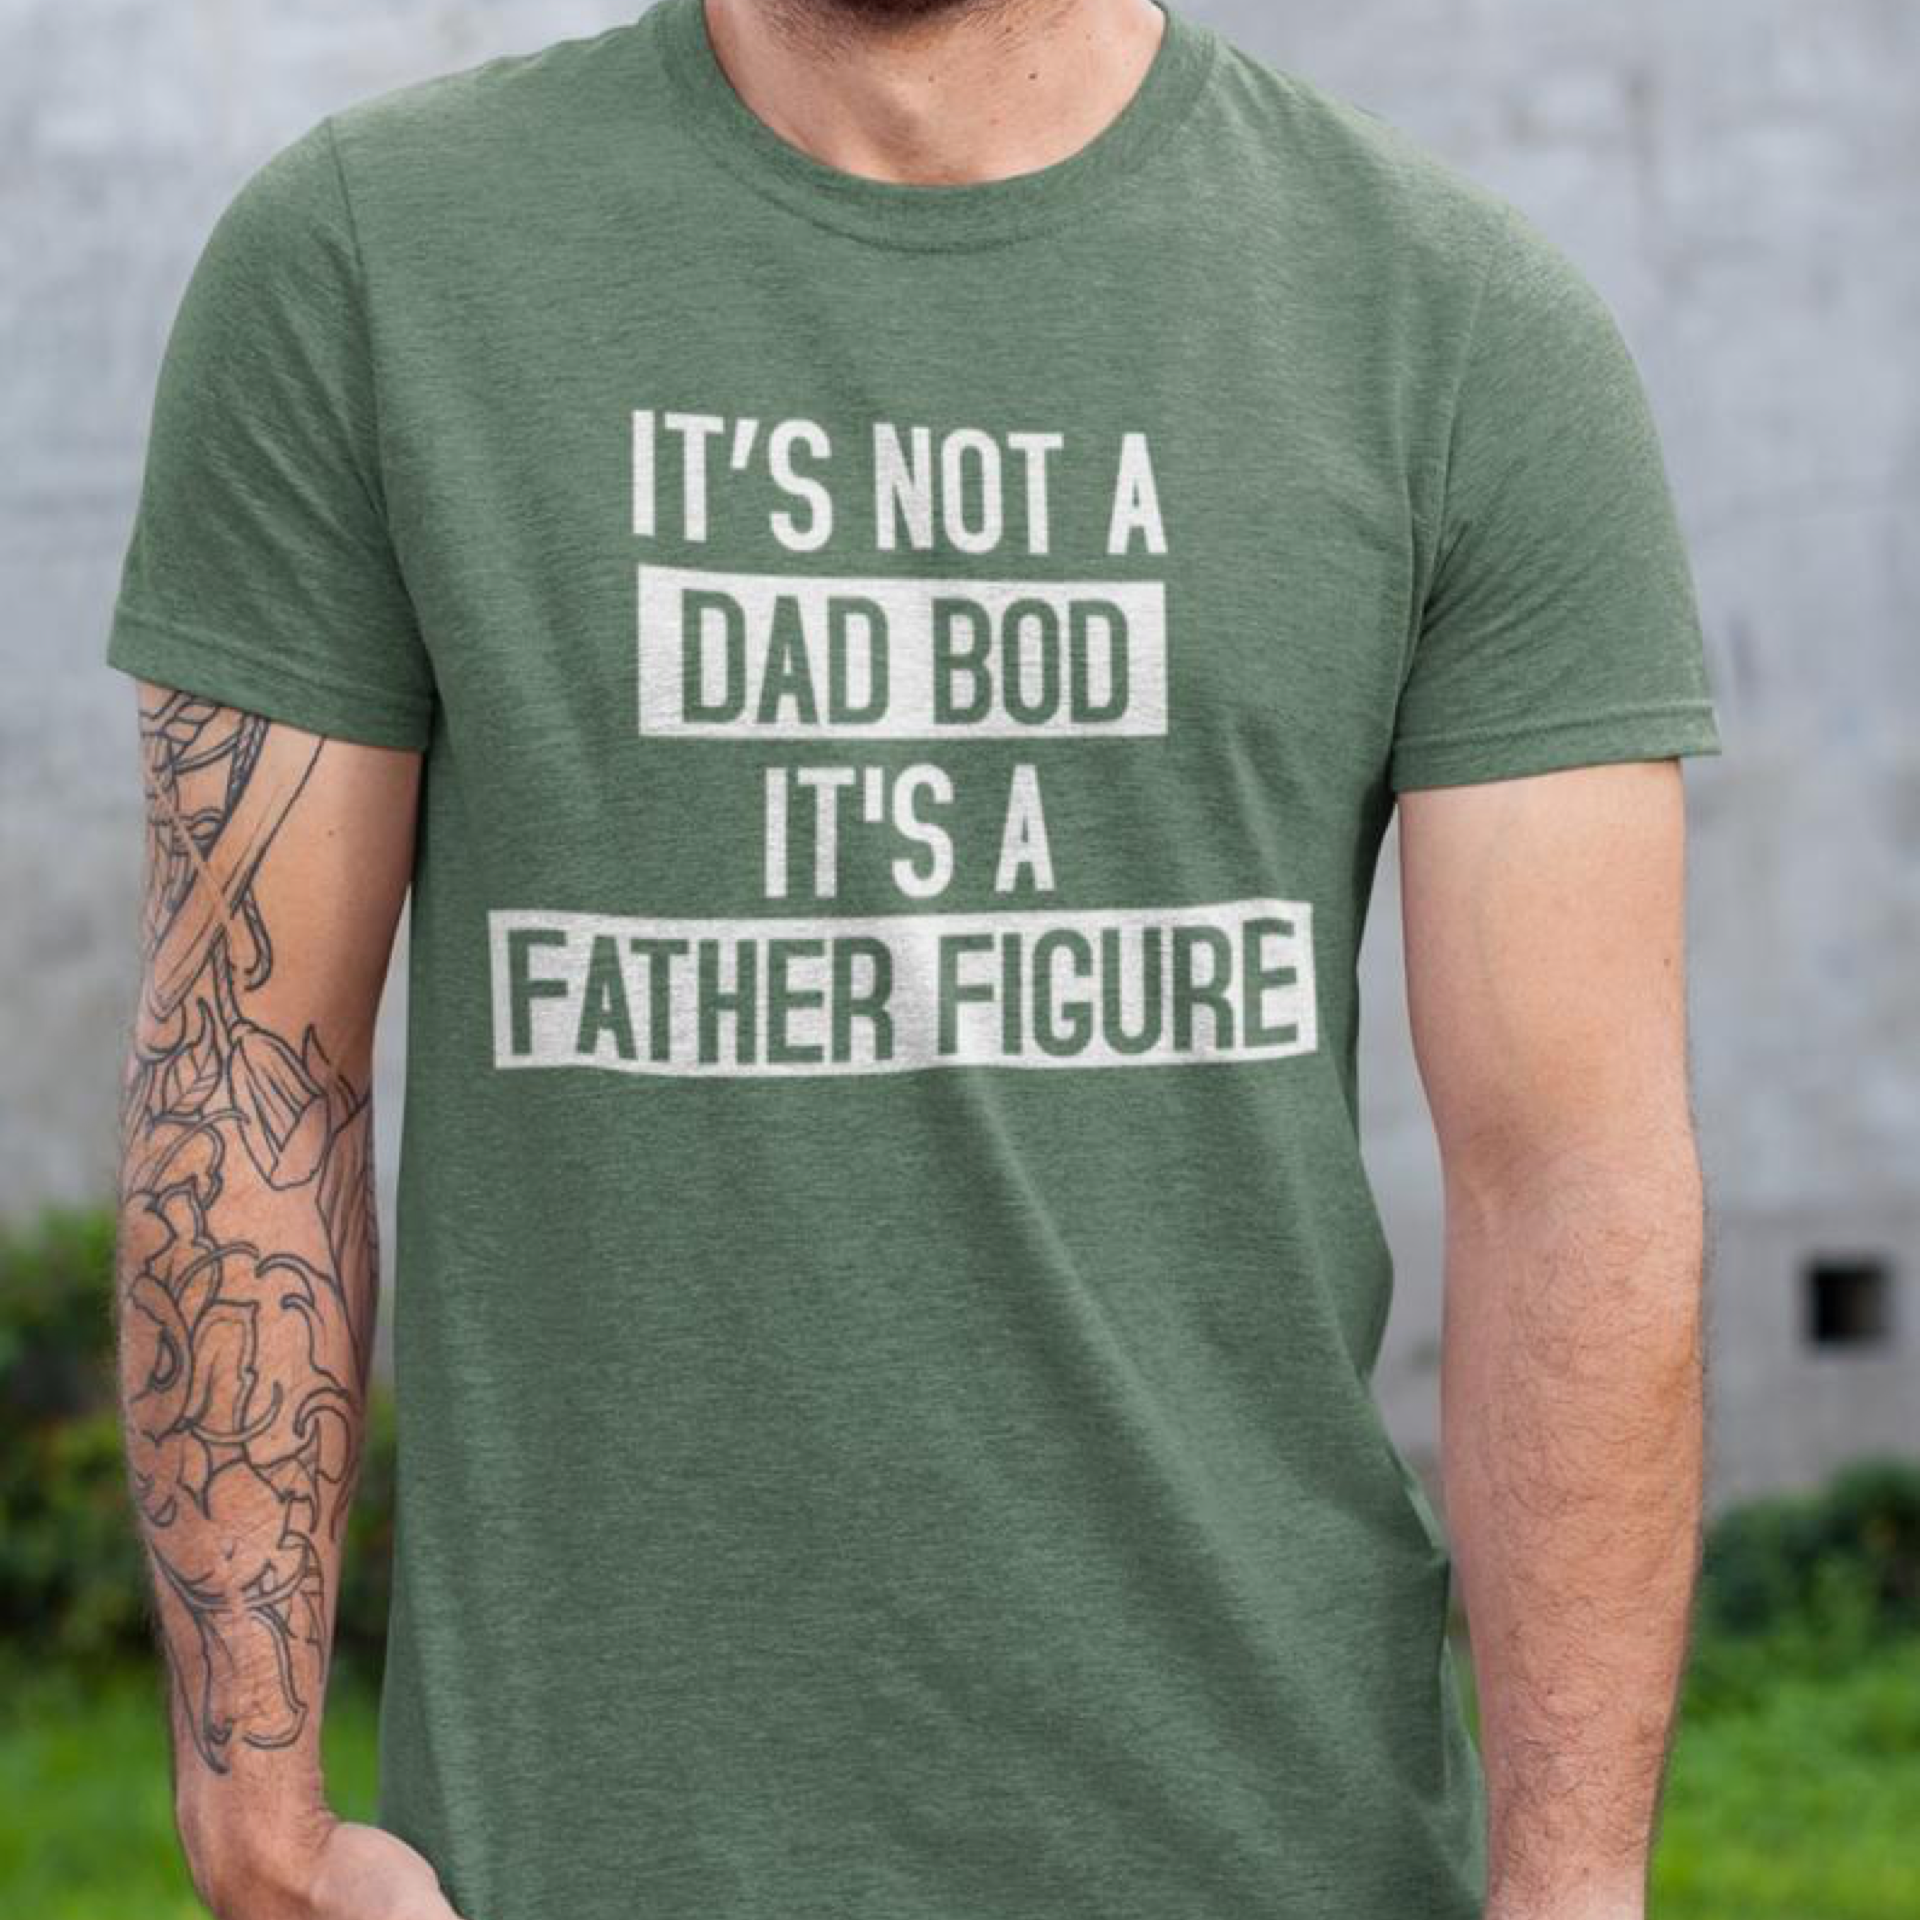 Dad Bod Shirt